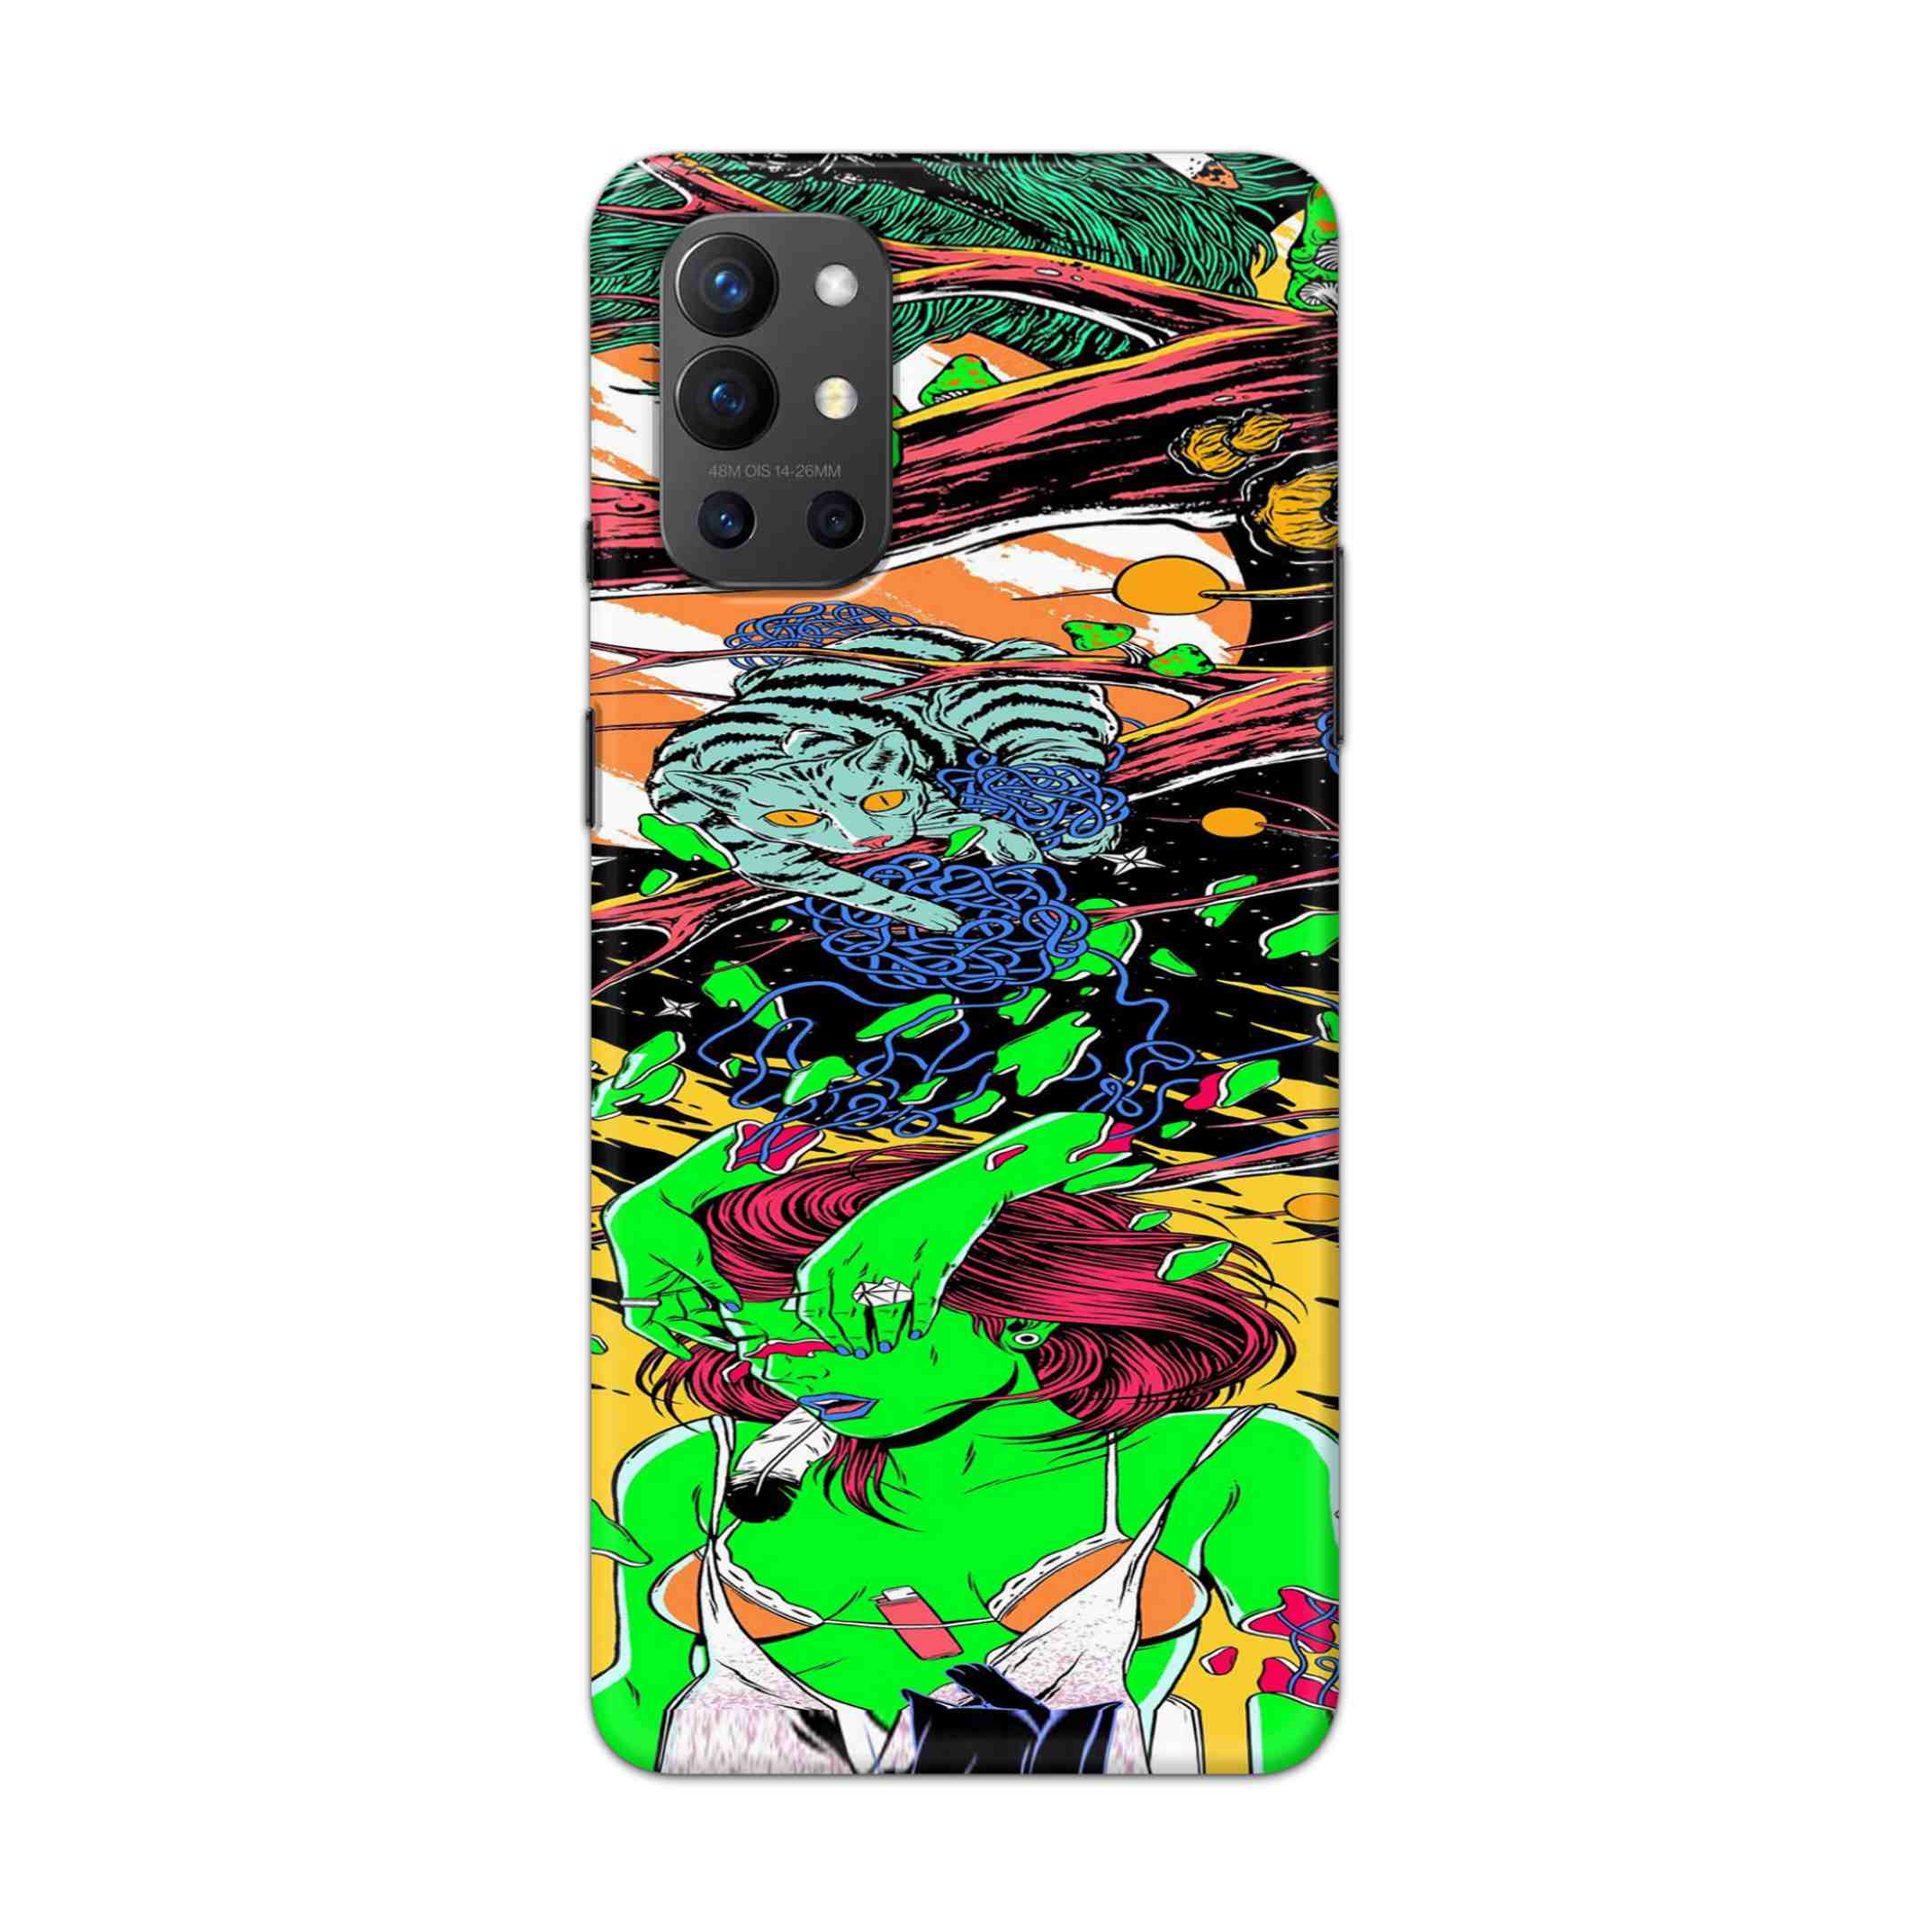 Buy Green Girl Art Hard Back Mobile Phone Case Cover For OnePlus 9R / 8T Online